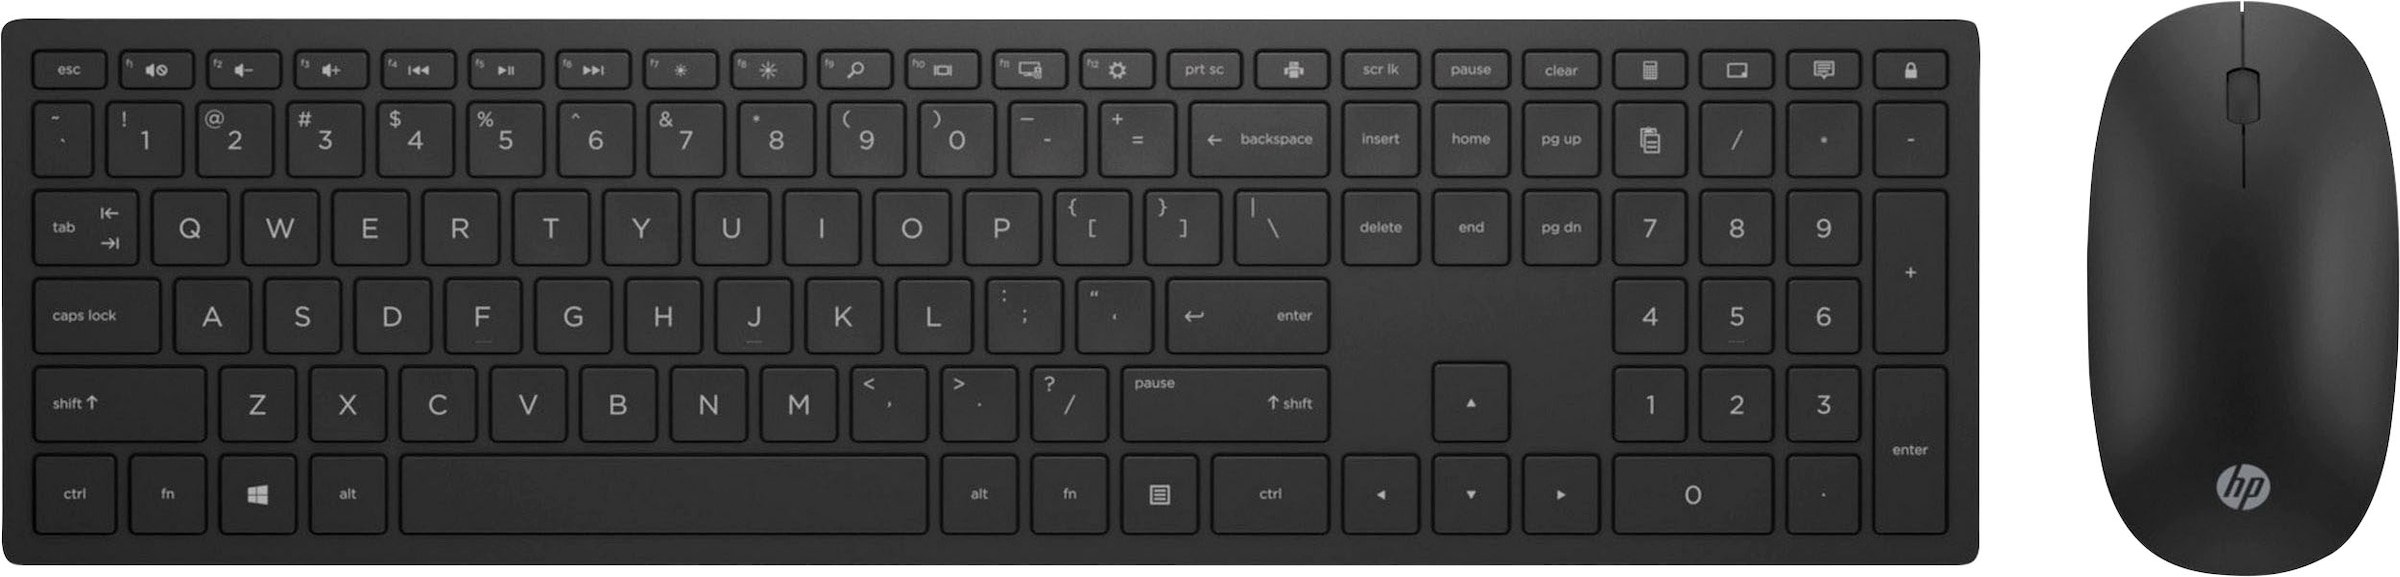 HP Tastatur »Pavilion 600« (Fn-Tasten-Zif...